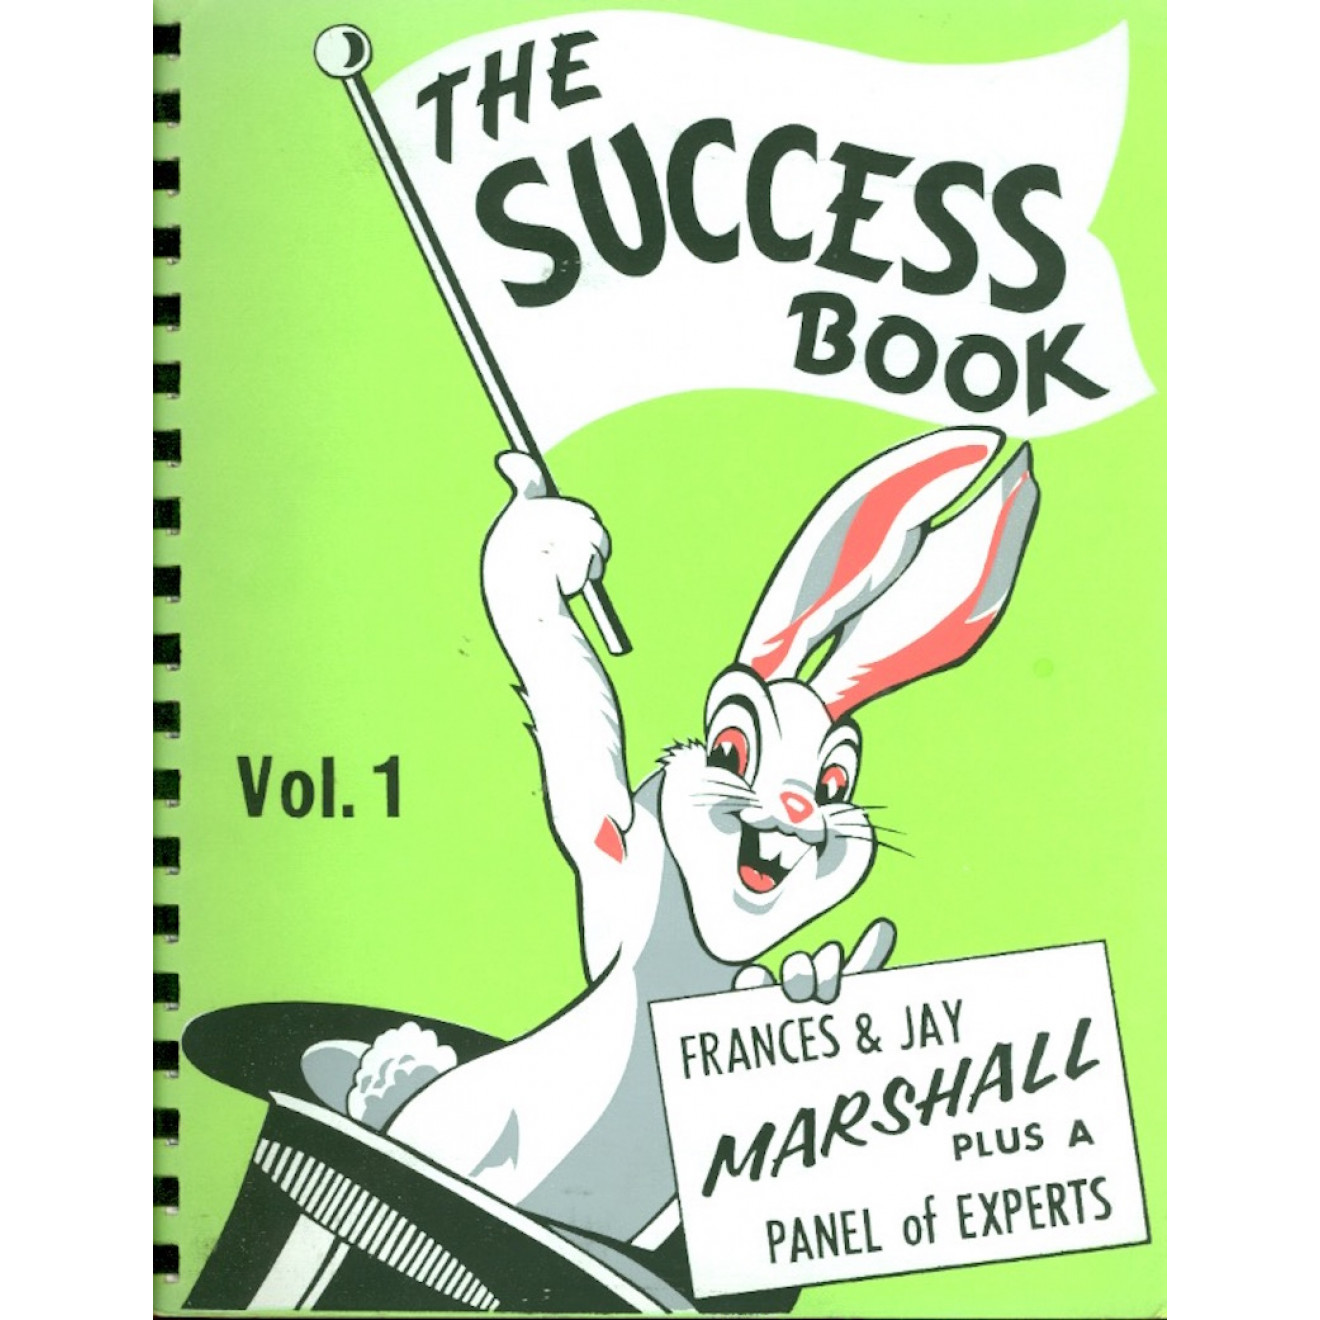 The Success Book Volume 1 & 2